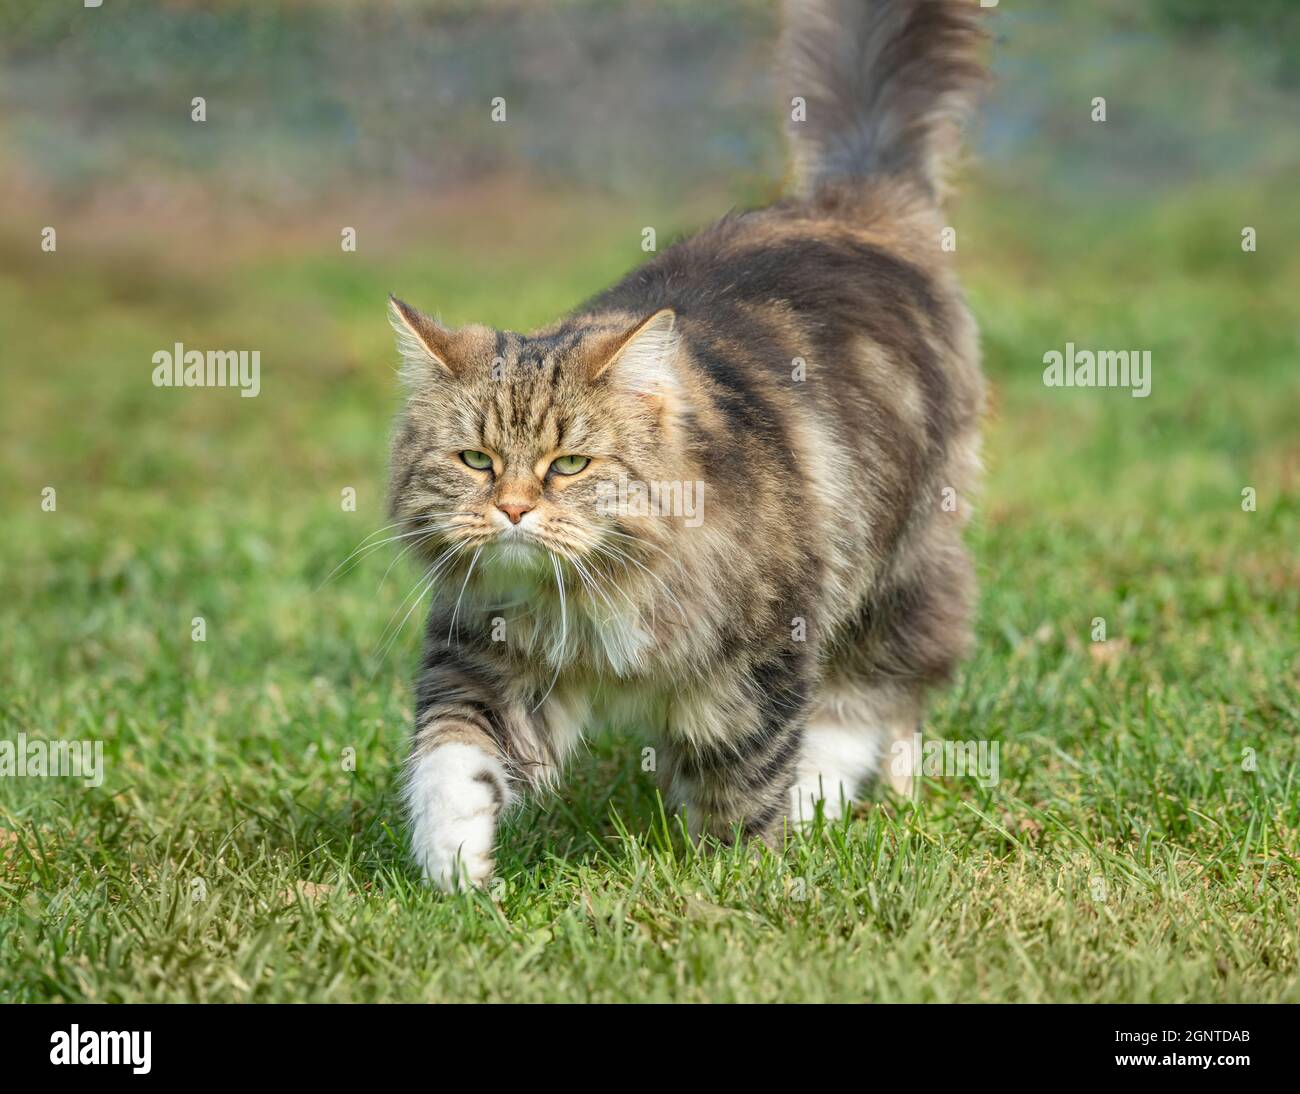 Siberian cat female walks on green grass lawn Stock Photo